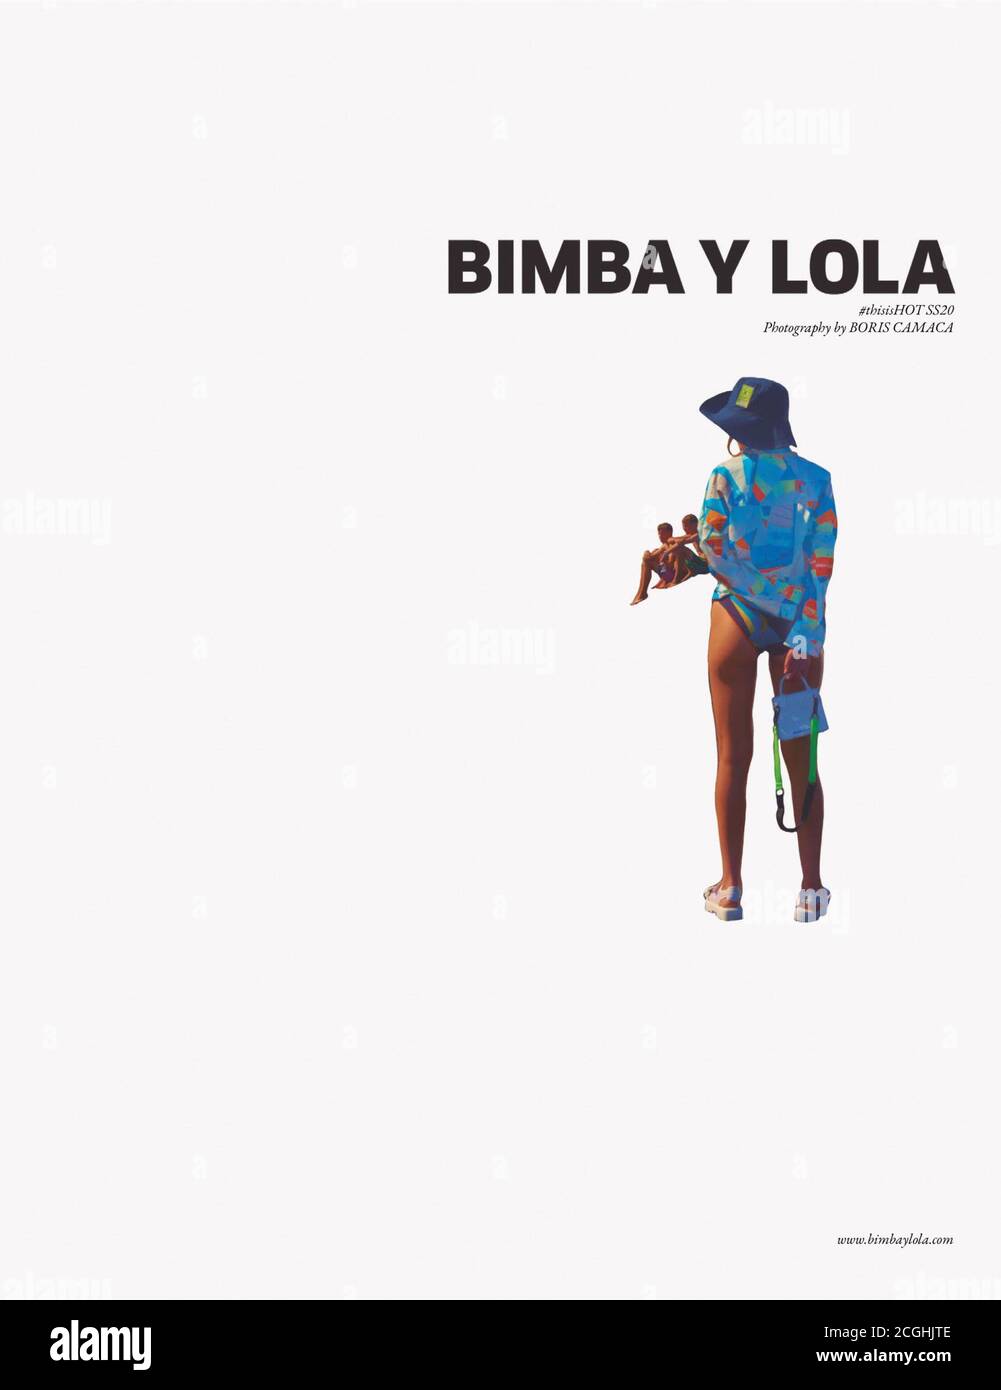 Bimba lola hi-res stock photography and images - Alamy